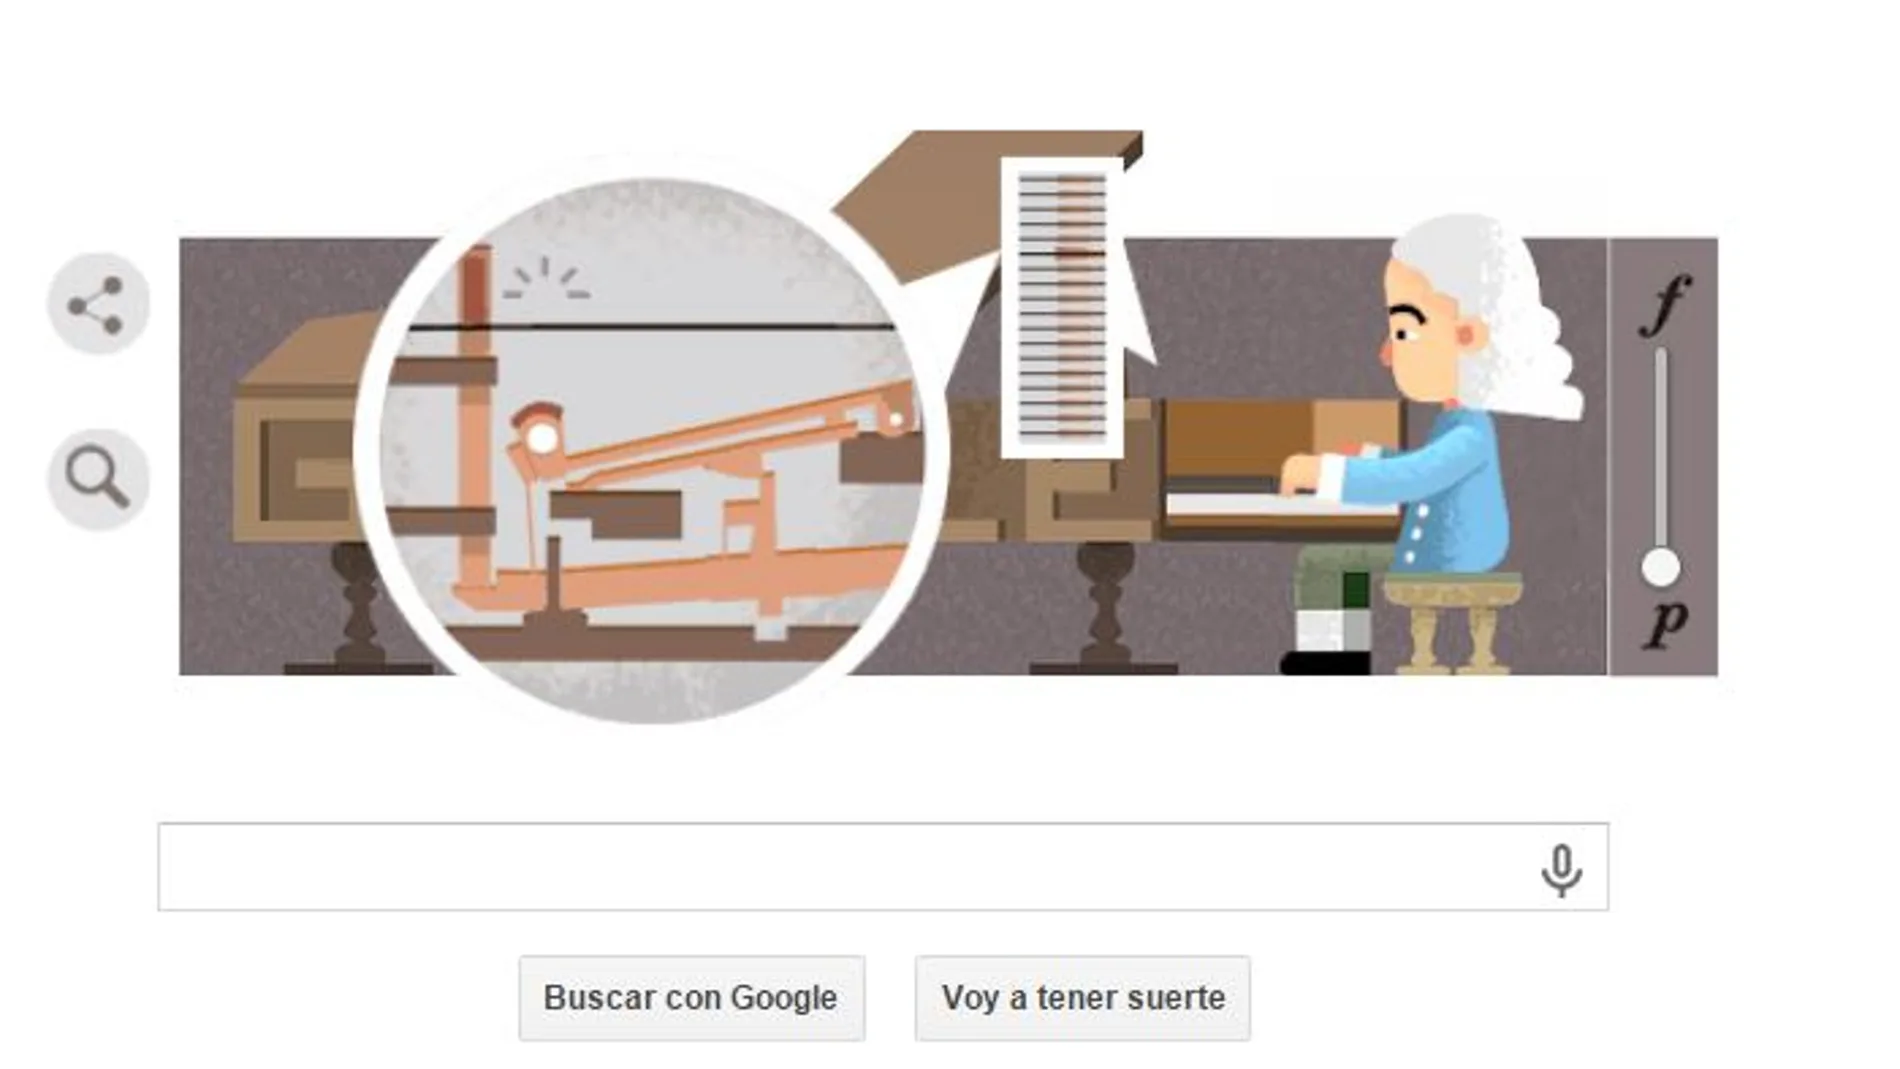 Al piano, el doodle de Google